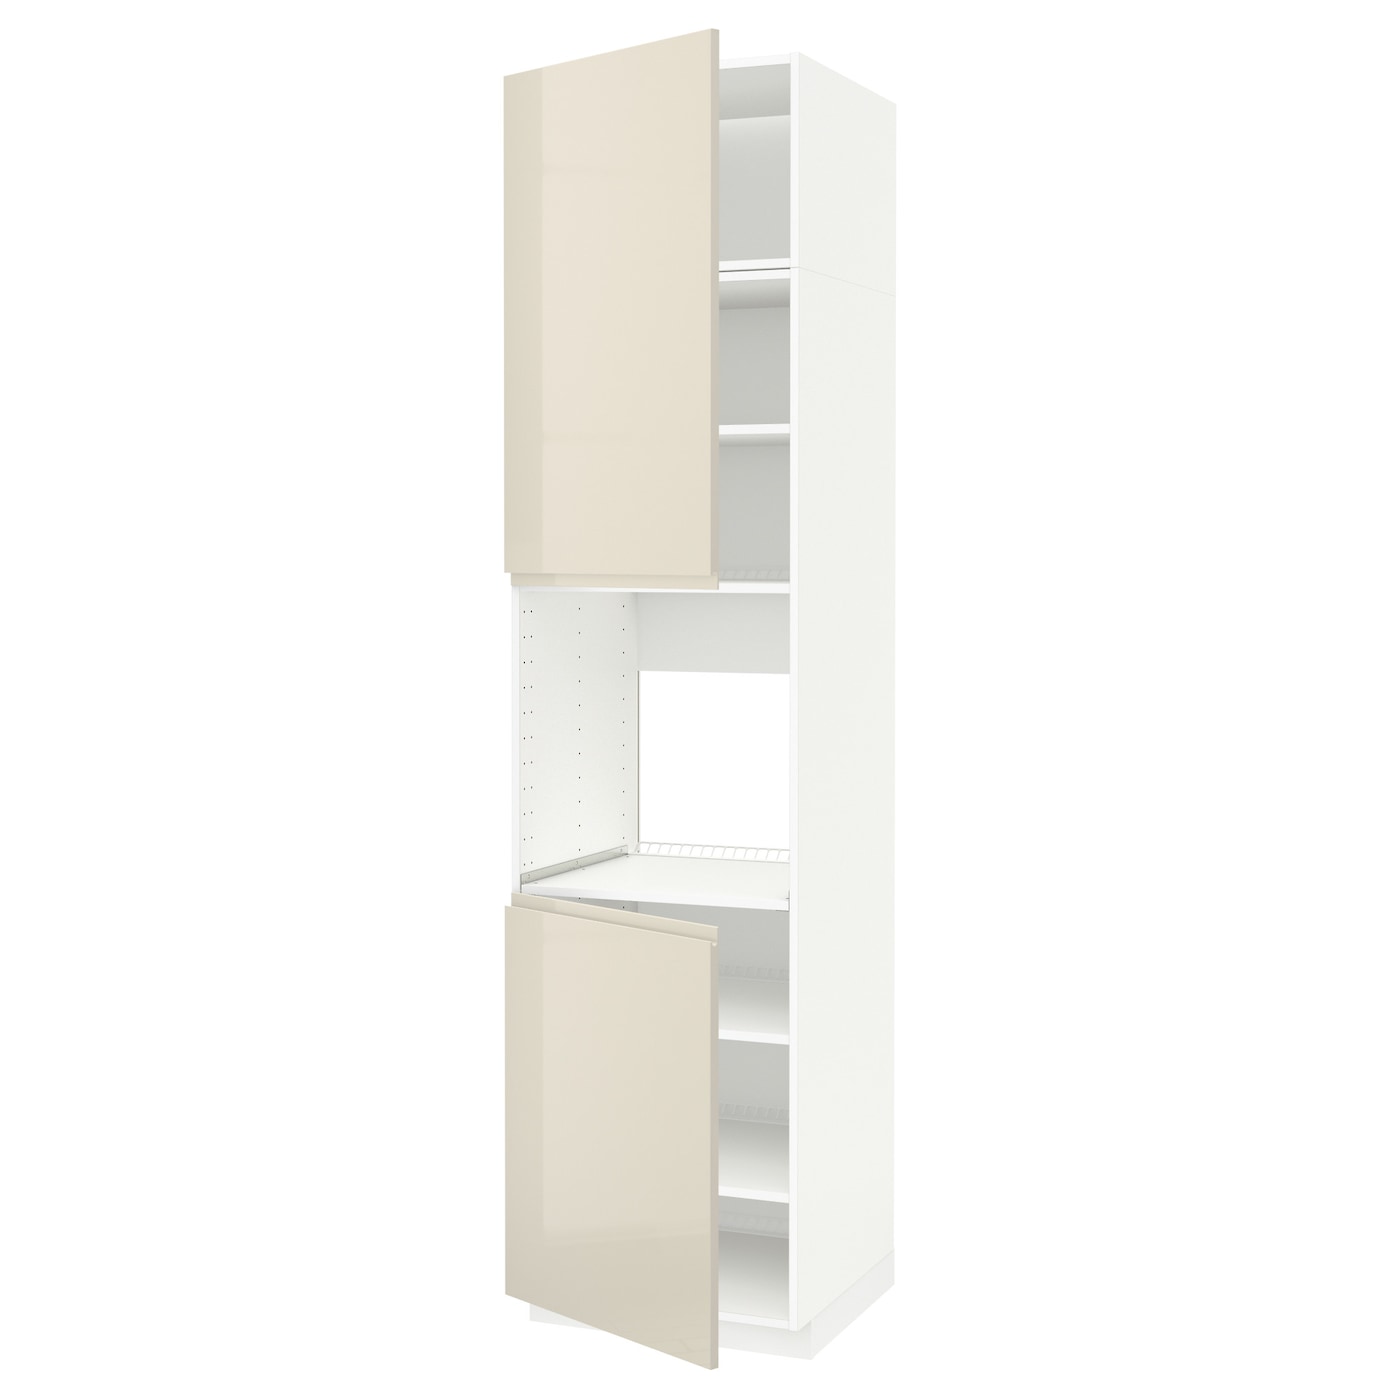 Кухонный шкаф-пенал - IKEA METOD/МЕТОД ИКЕА, 240х60х60 см, белый/бежевый глянцевый